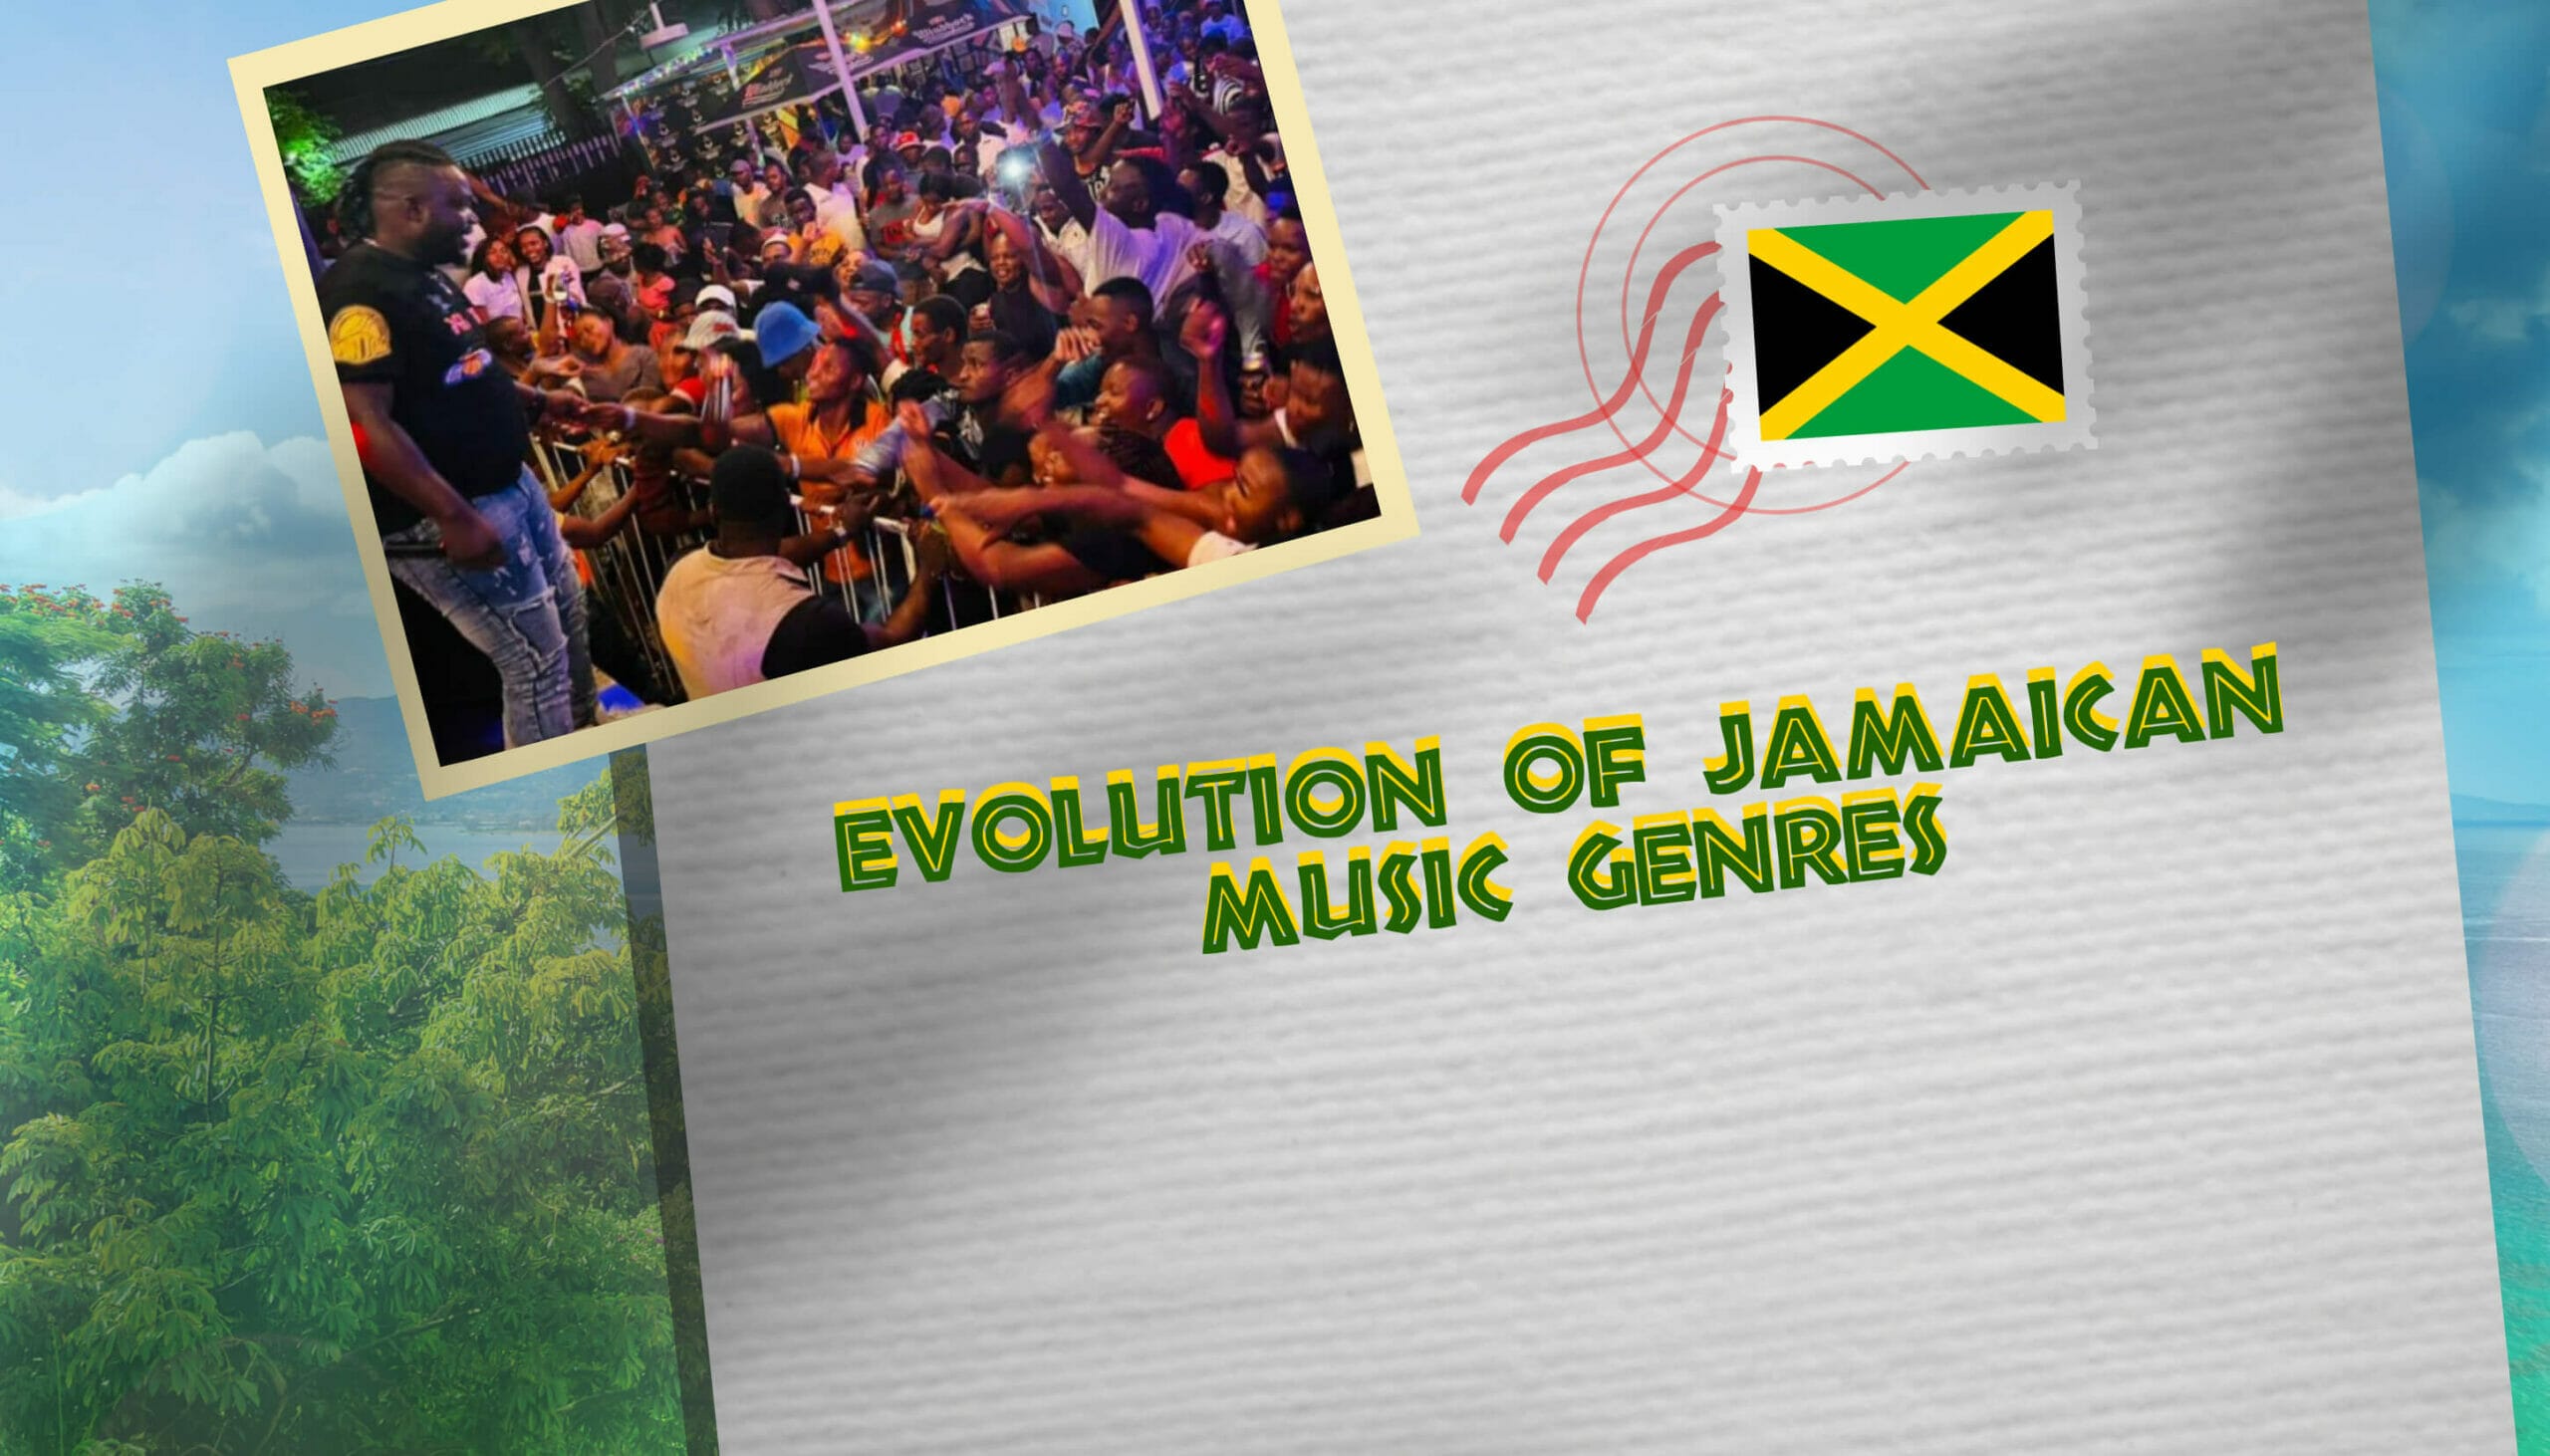 Evolution of Jamaican music genres